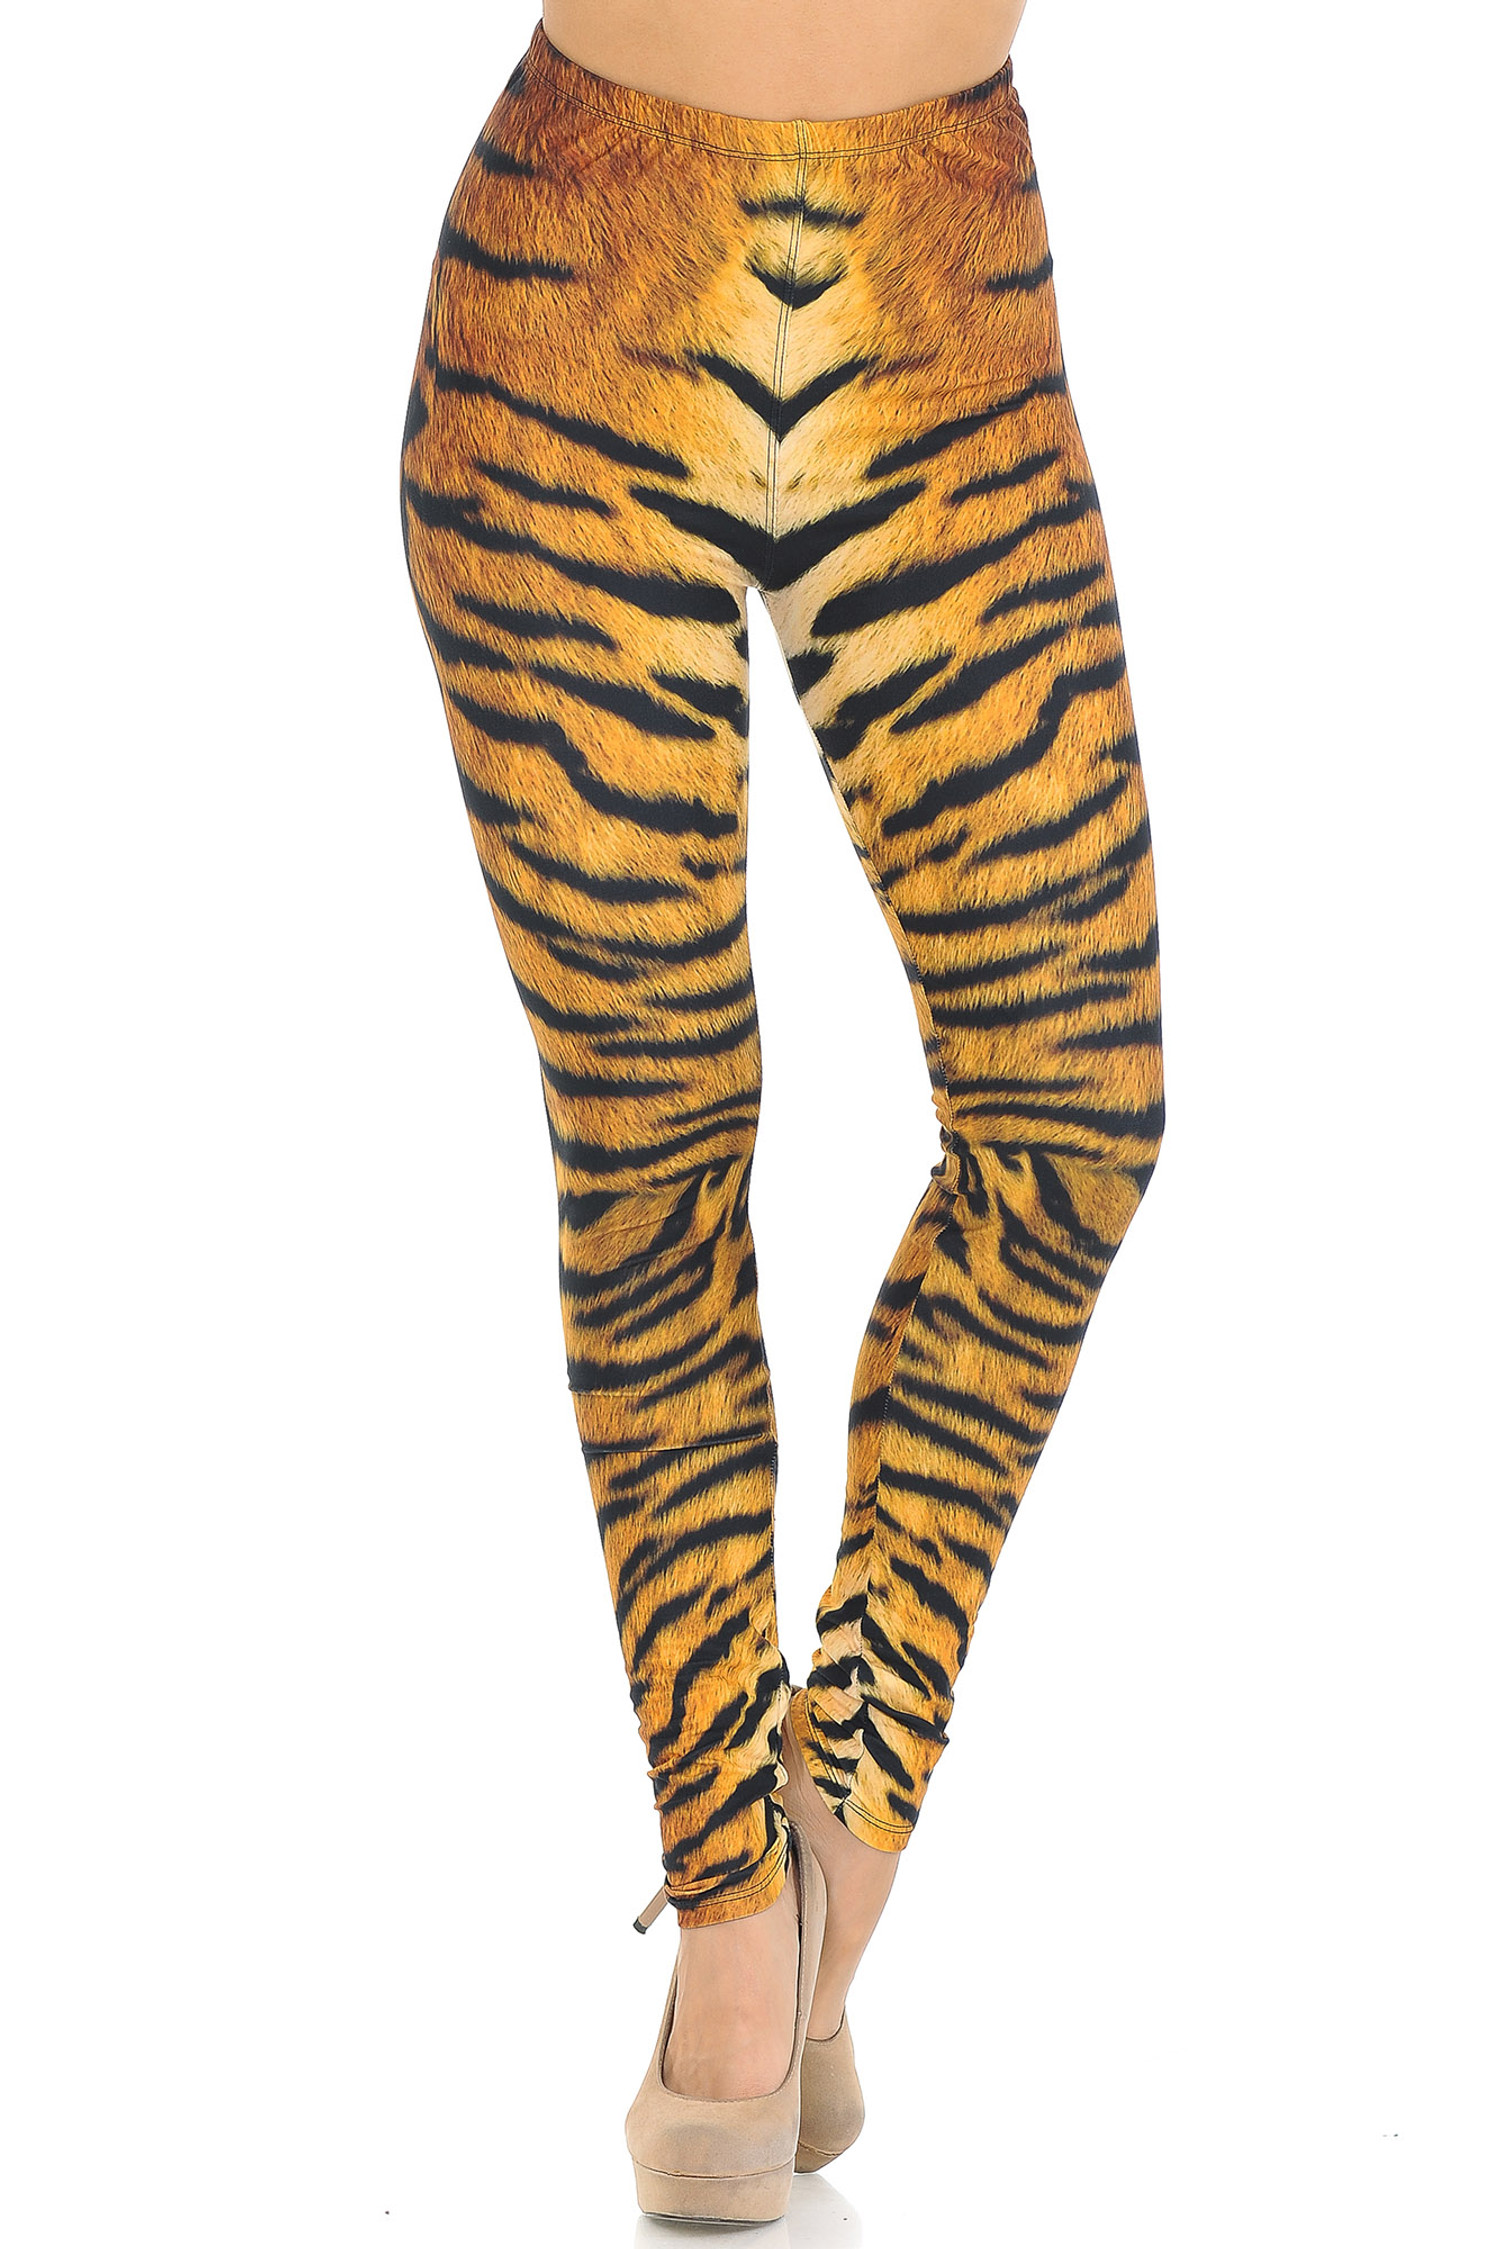 Creamy Soft Tiger Print Leggings - USA Fashion (Brown) One Size